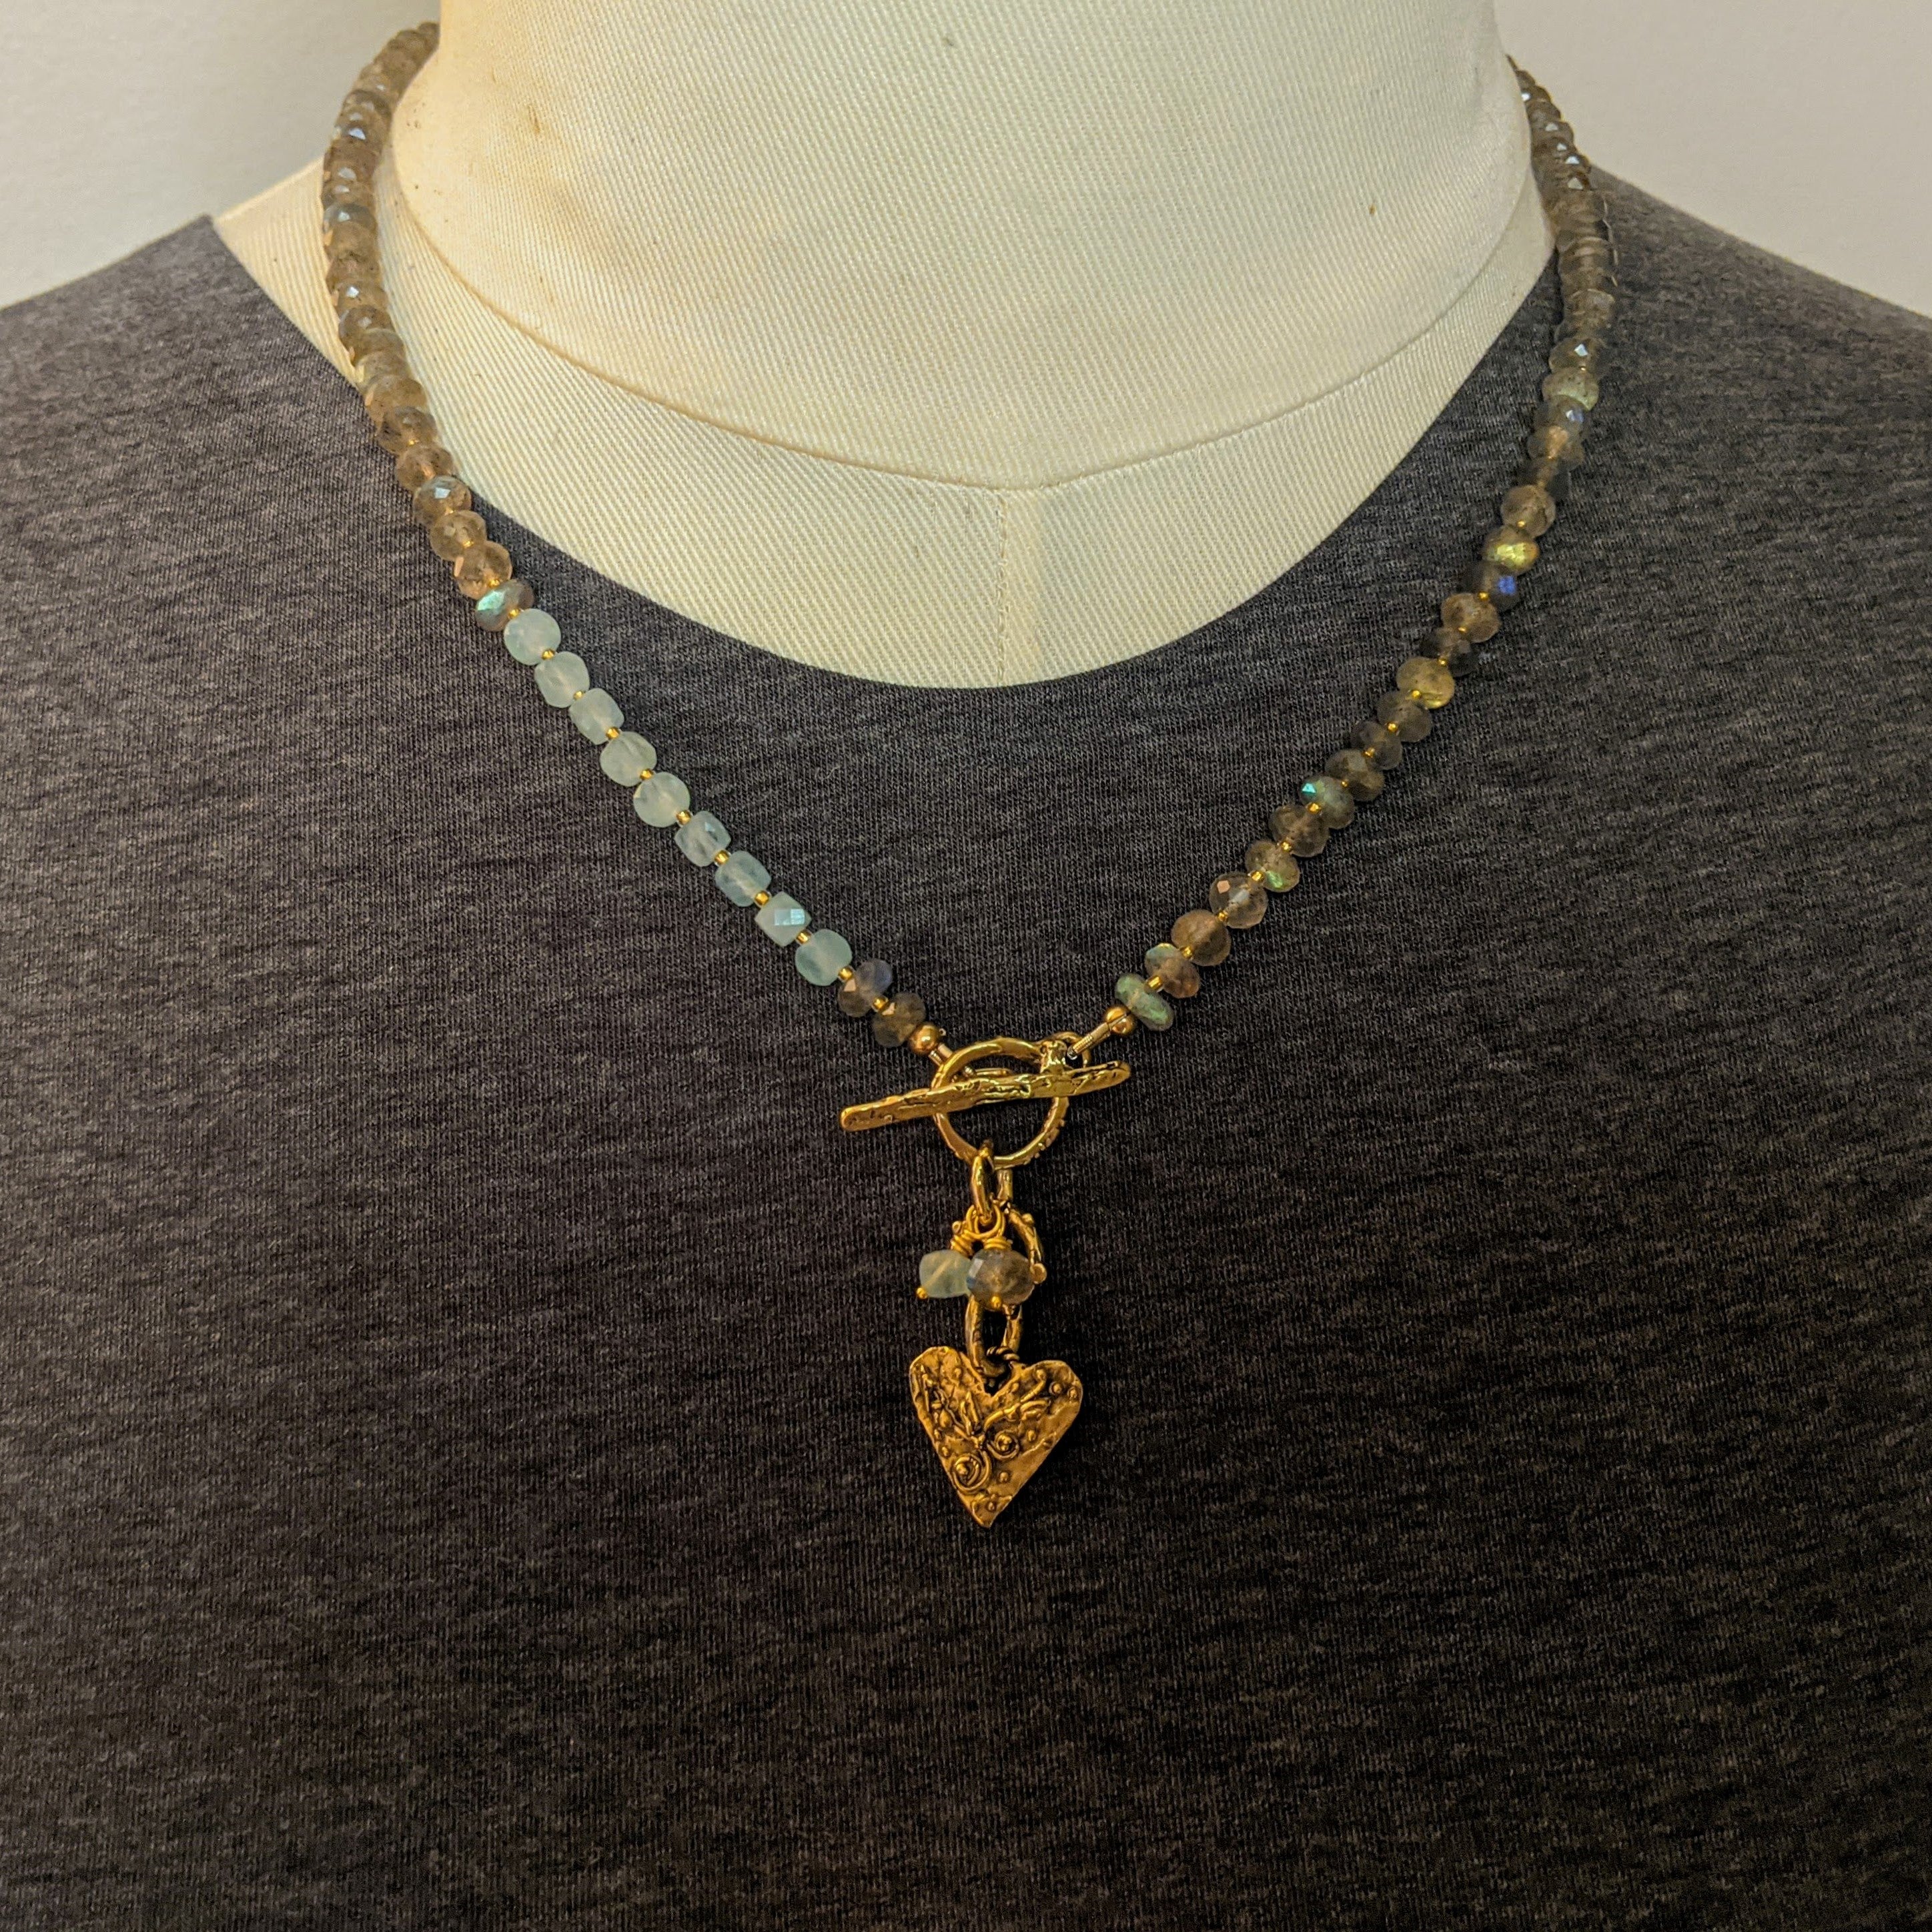 Labradorite artisan necklace with gold bronze artisan elements. Created by Aurora Creative Jewellery.